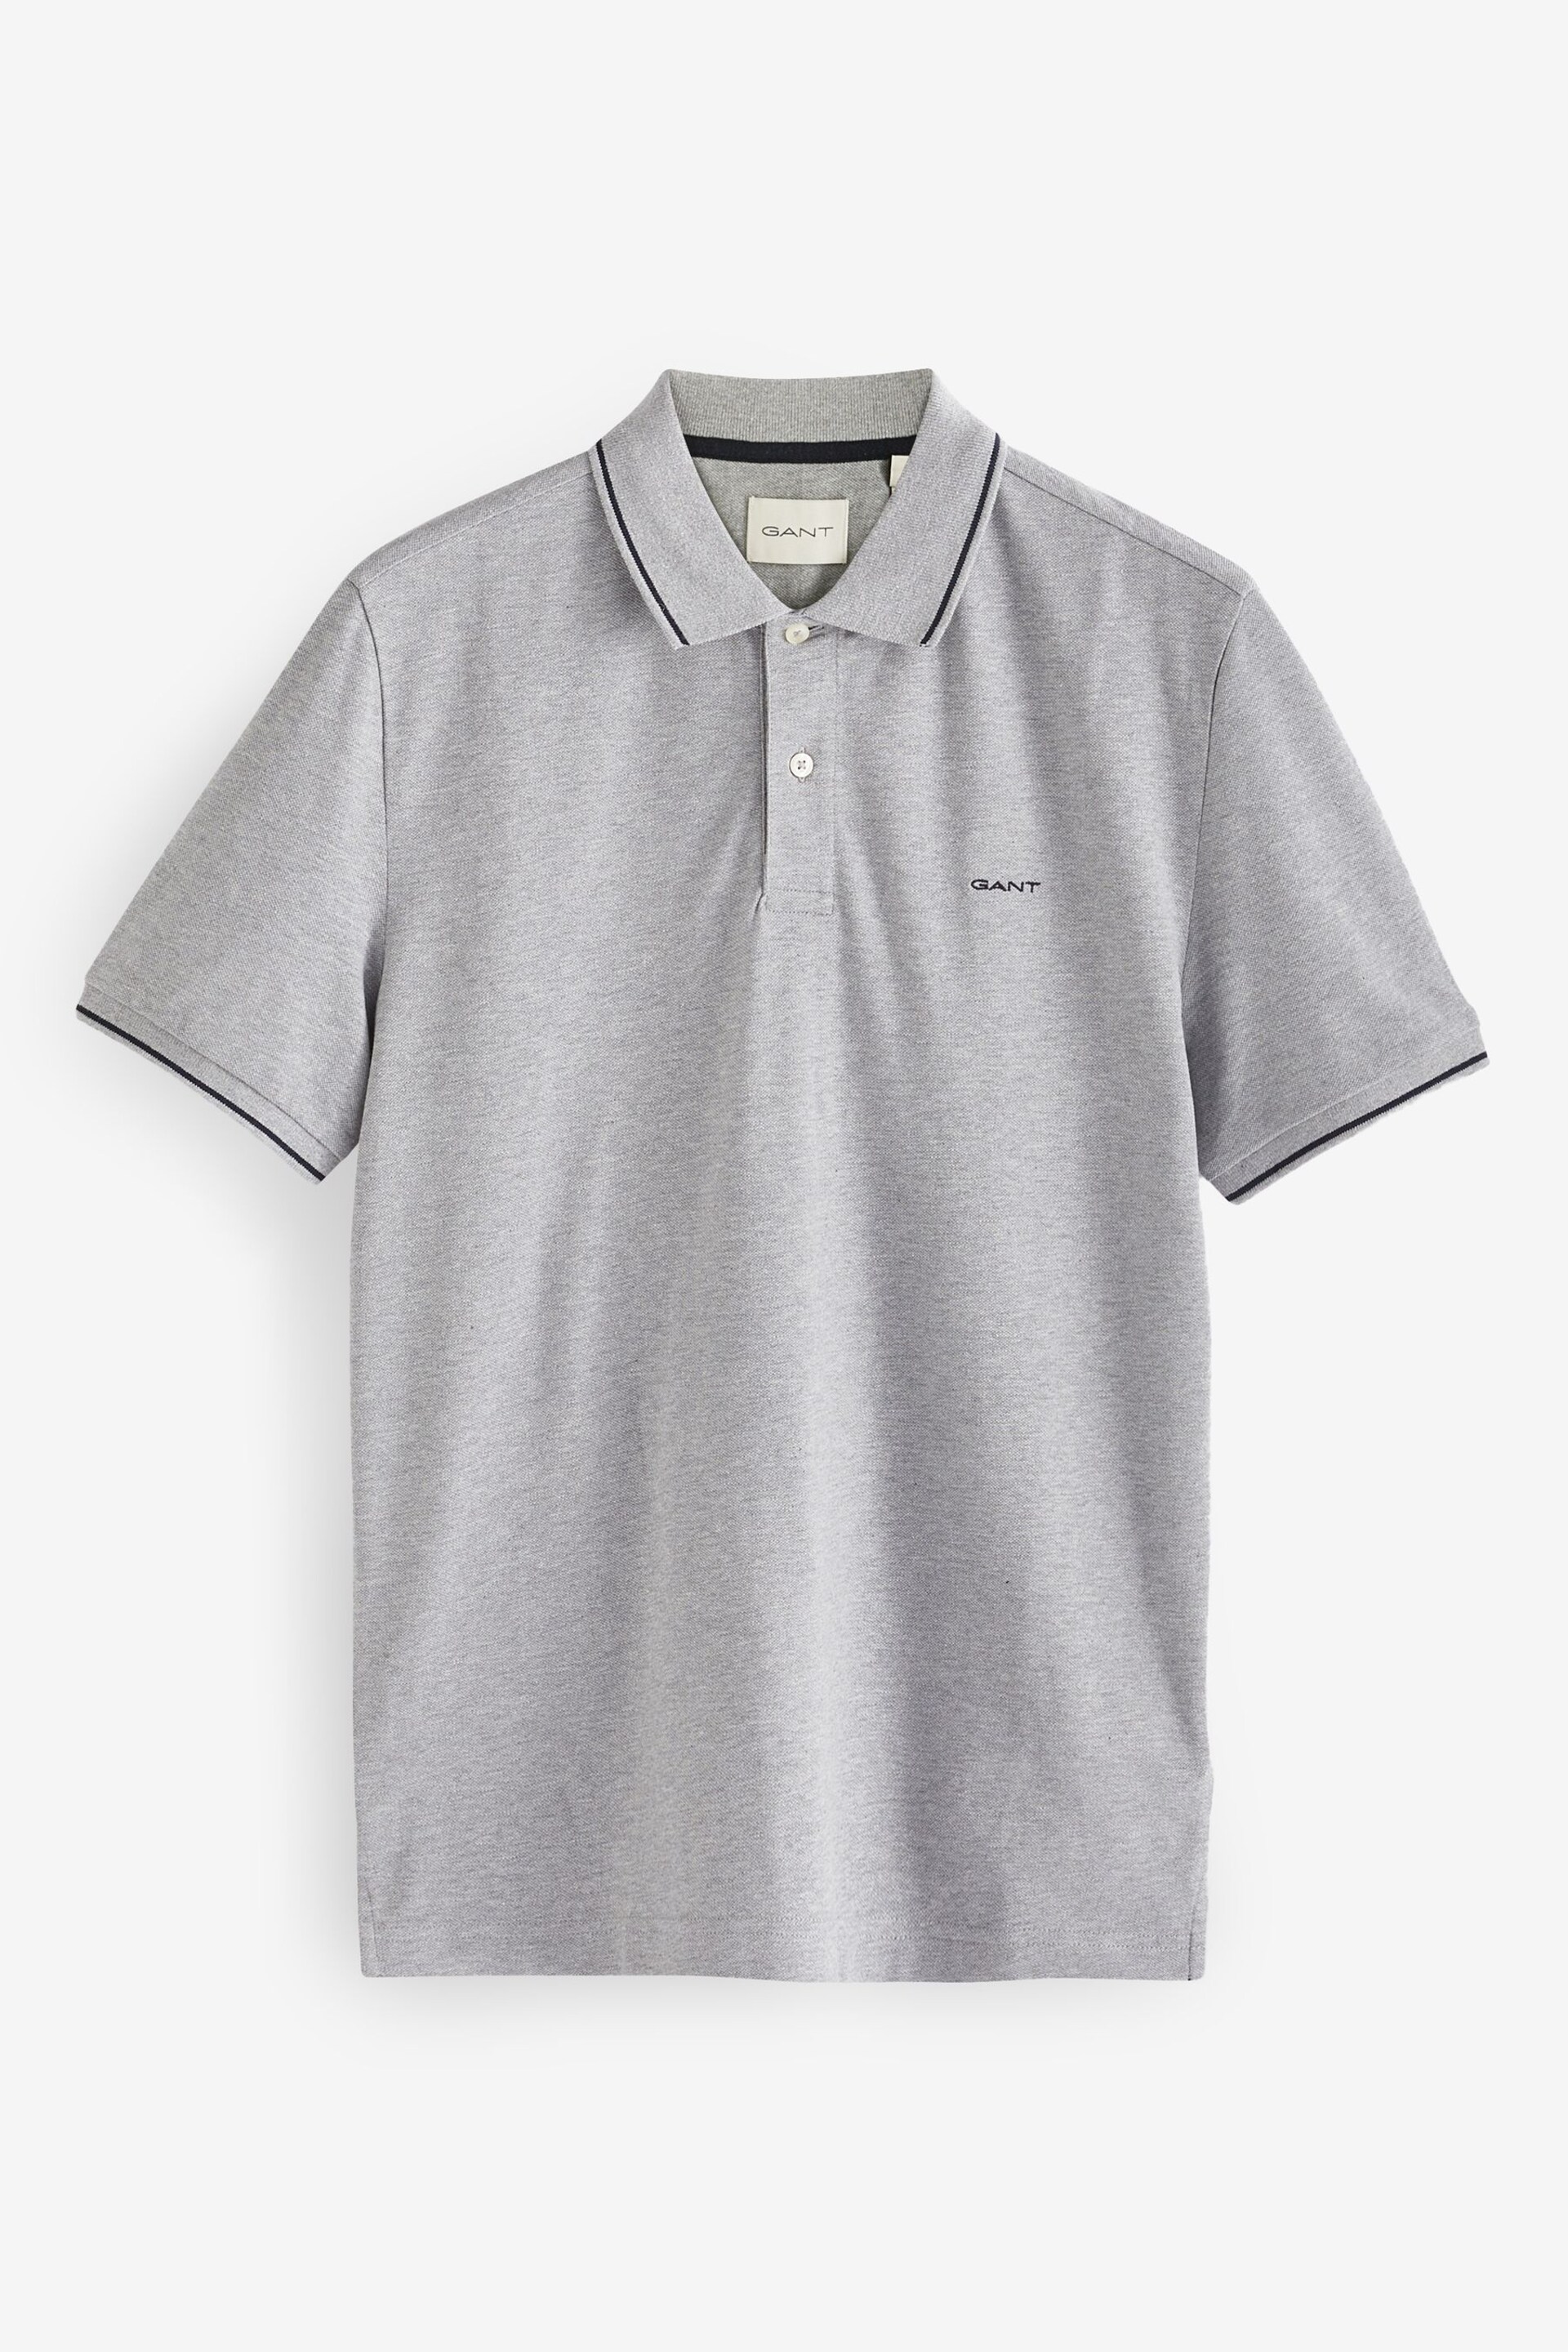 GANT Grey Tipped Piqué Polo Shirt - Image 5 of 5